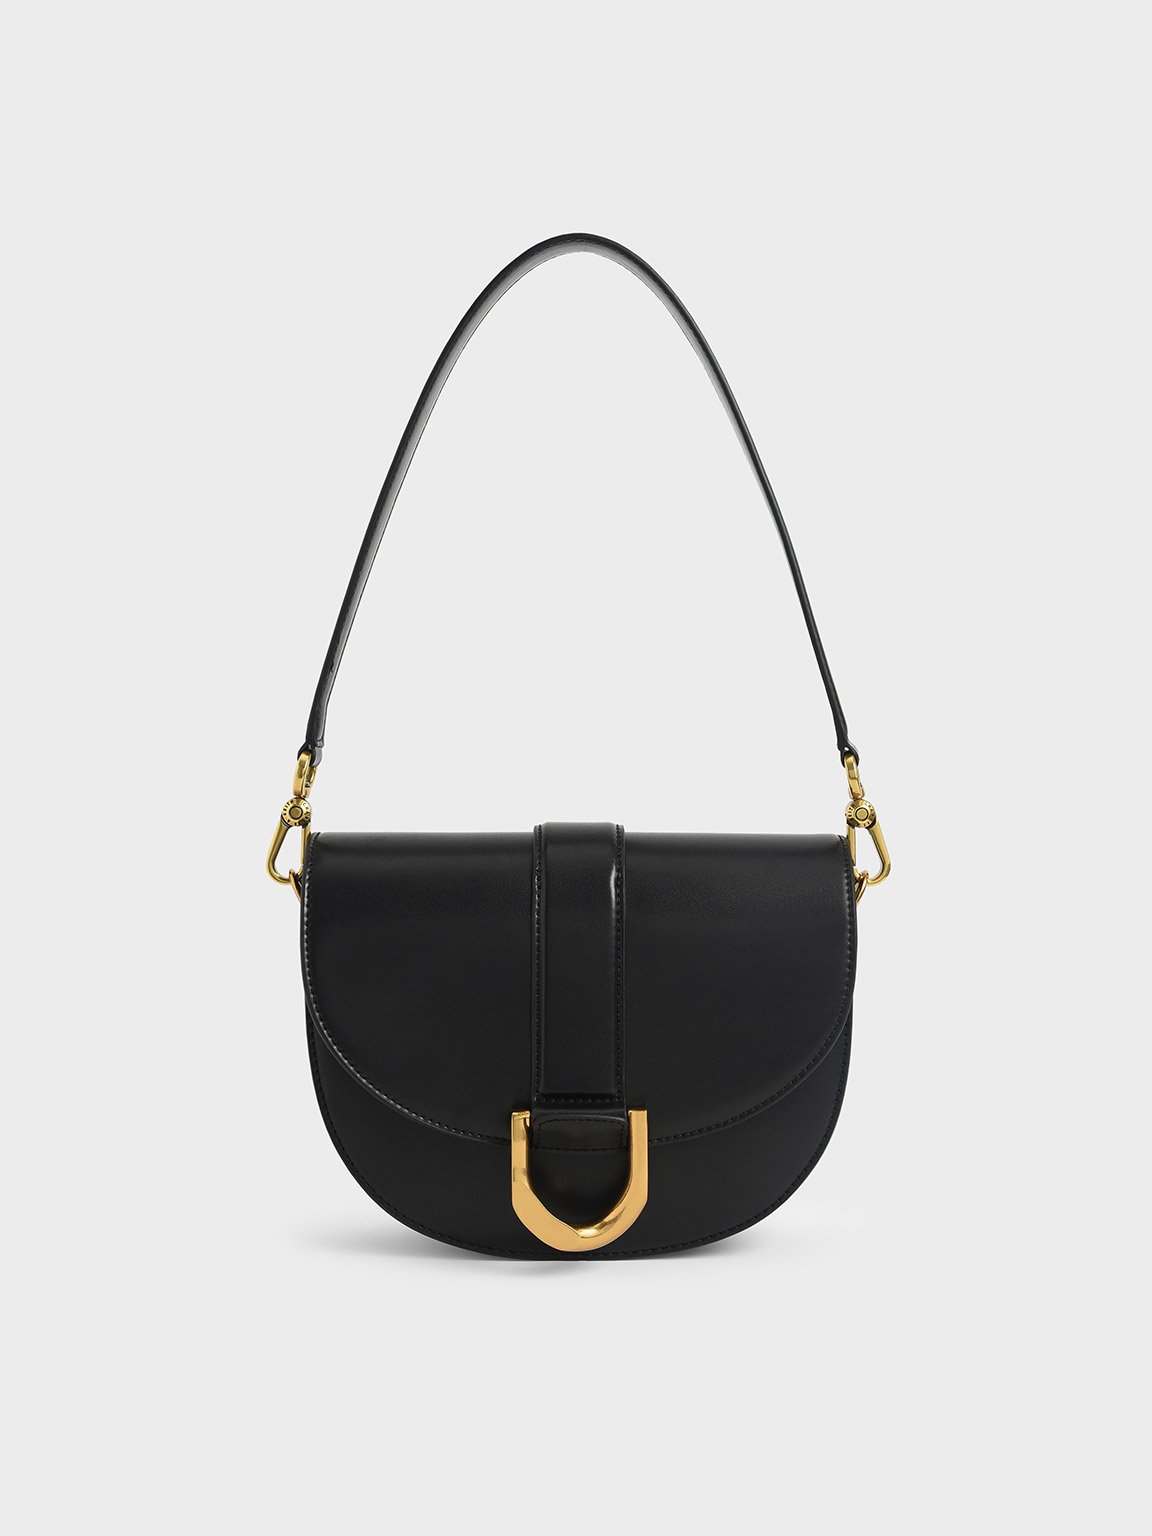 Buy Charles & Keith Saddle Bag Black [CK2-20150508] Online - Best